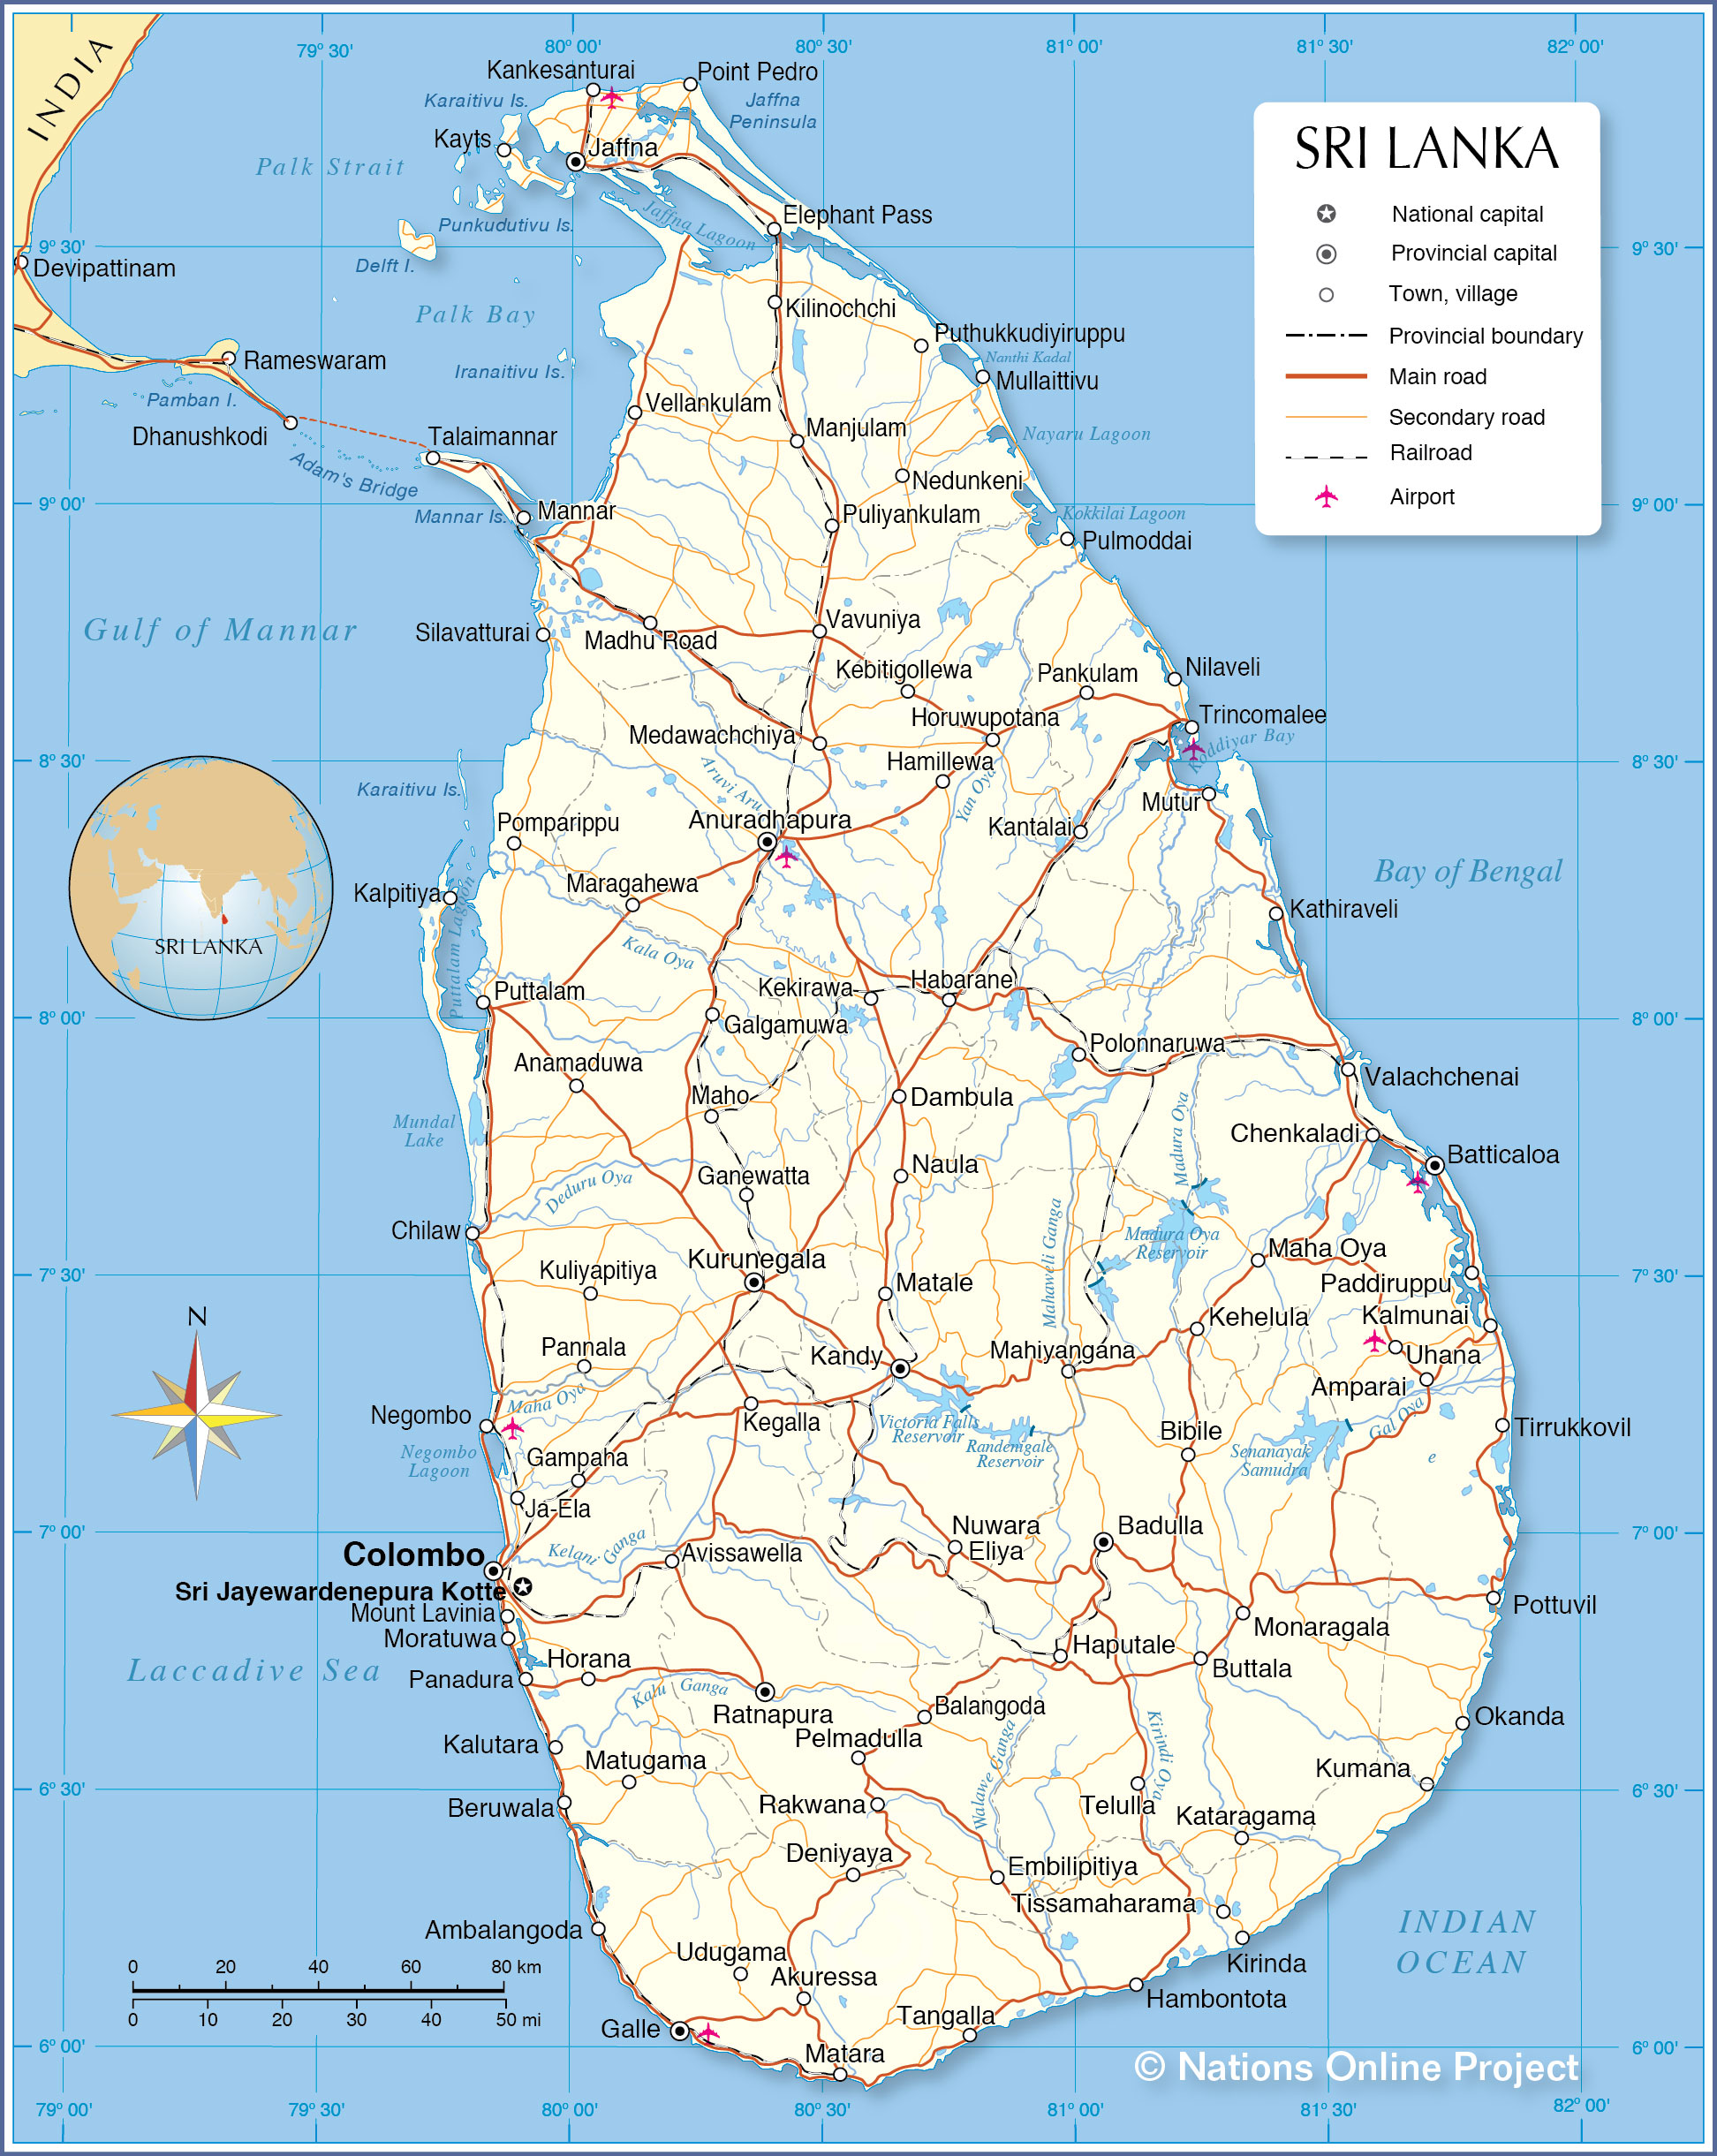 Sri Lanka Political Map Political Map of Sri Lanka   Nations Online Project